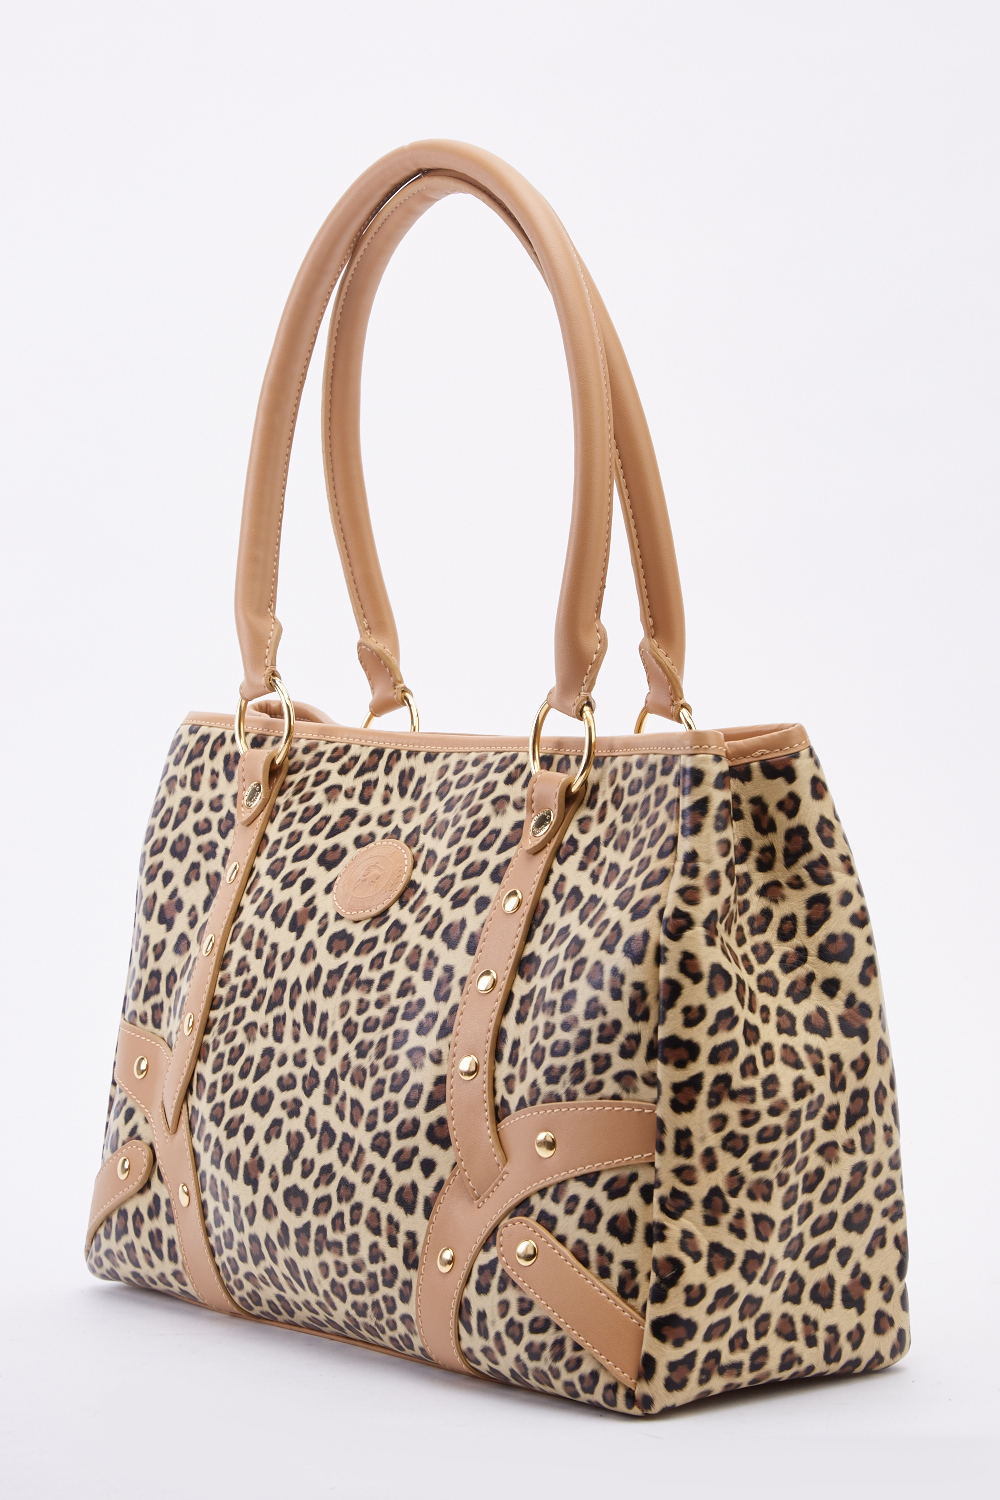 Leopard Print Contrast Duffle Bag - Just $6